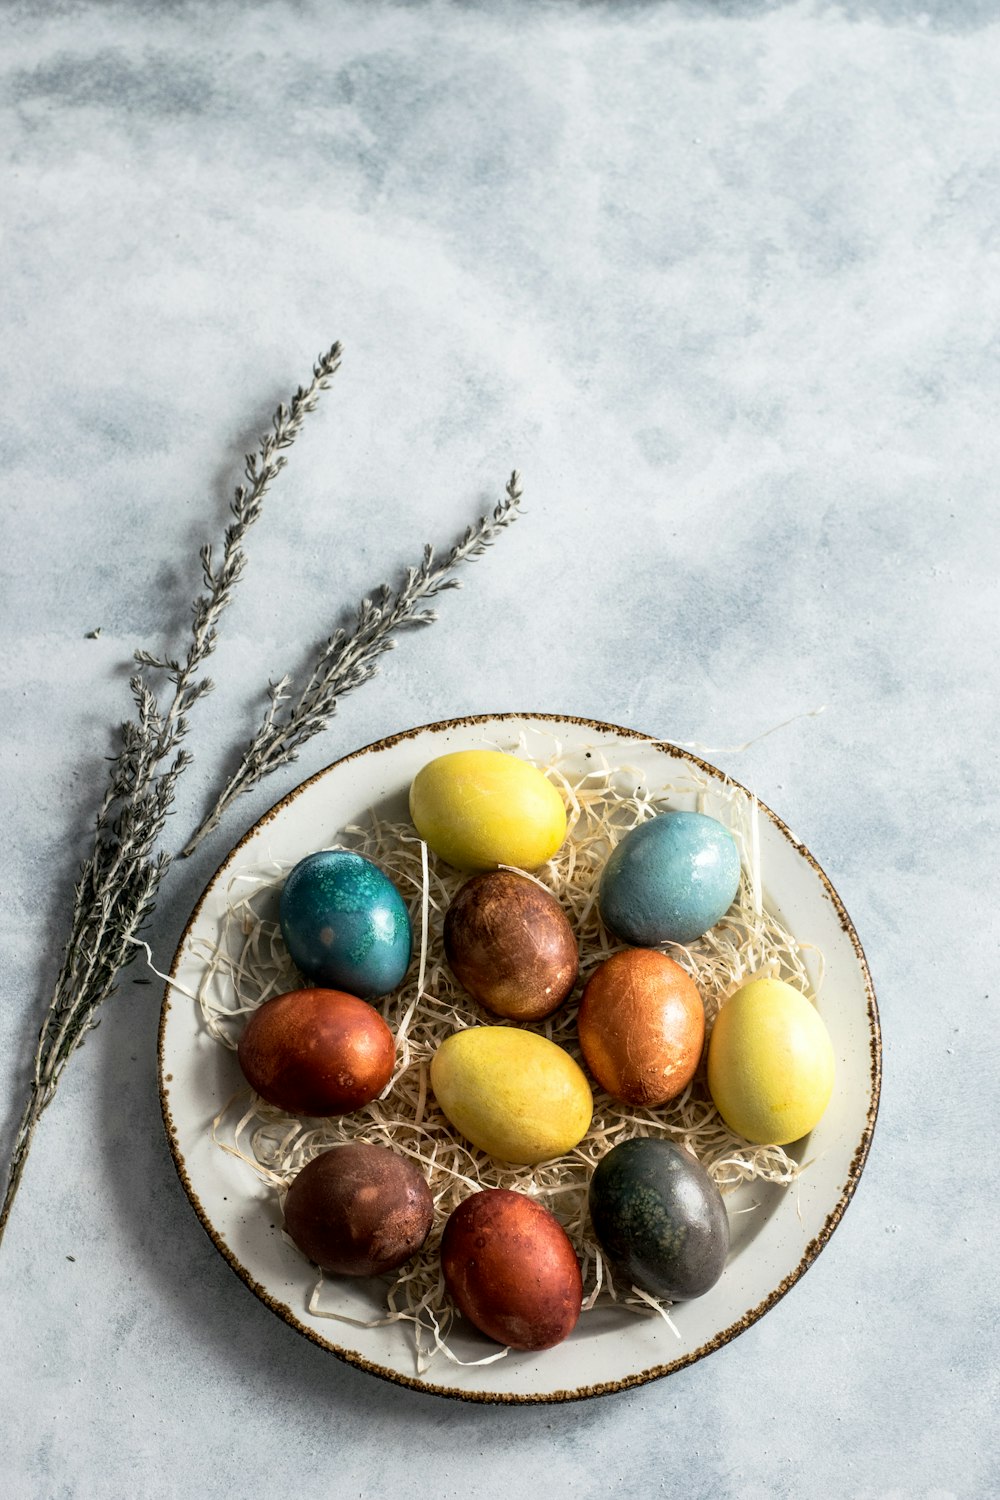 uova di colori assortiti su vassoio in ceramica bianca